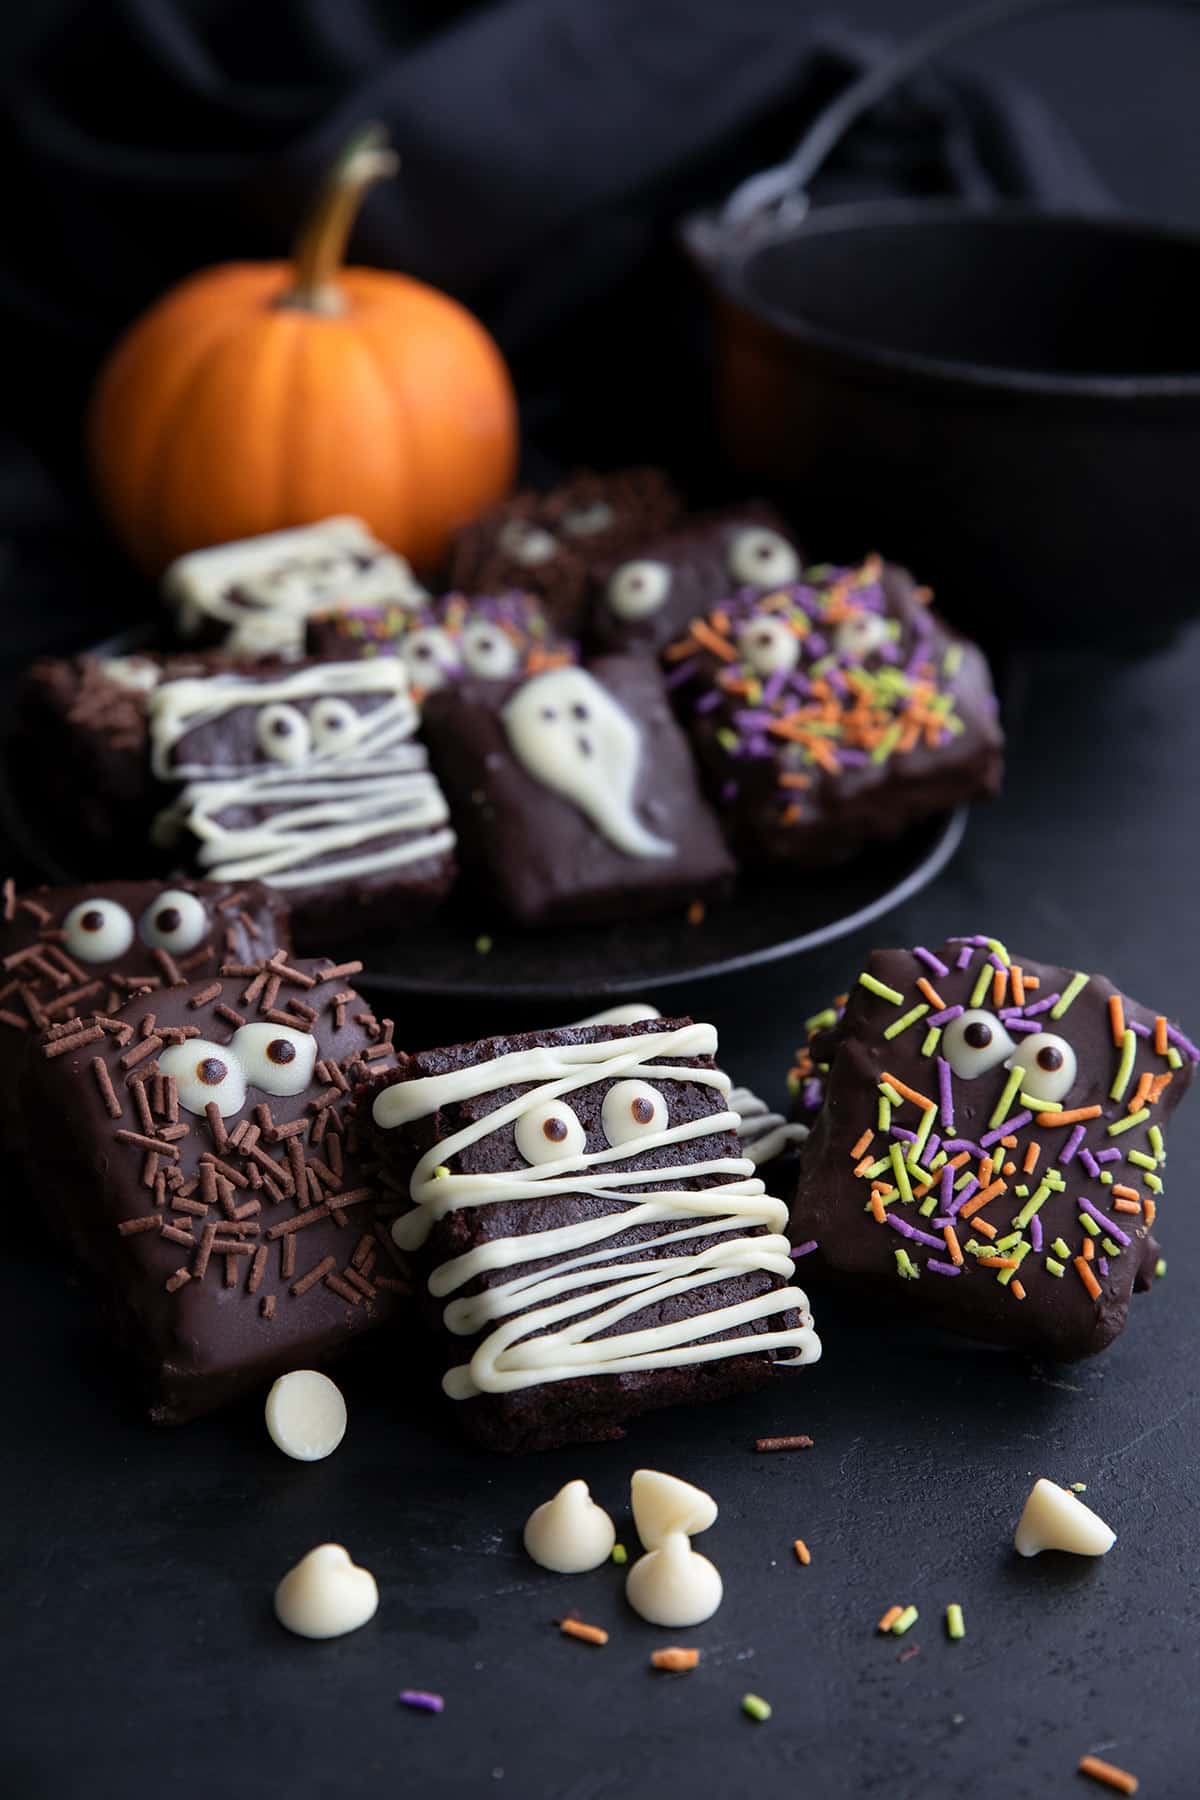 Keto brownies decorated with chocolate eyeballs and Halloween sprinkles.